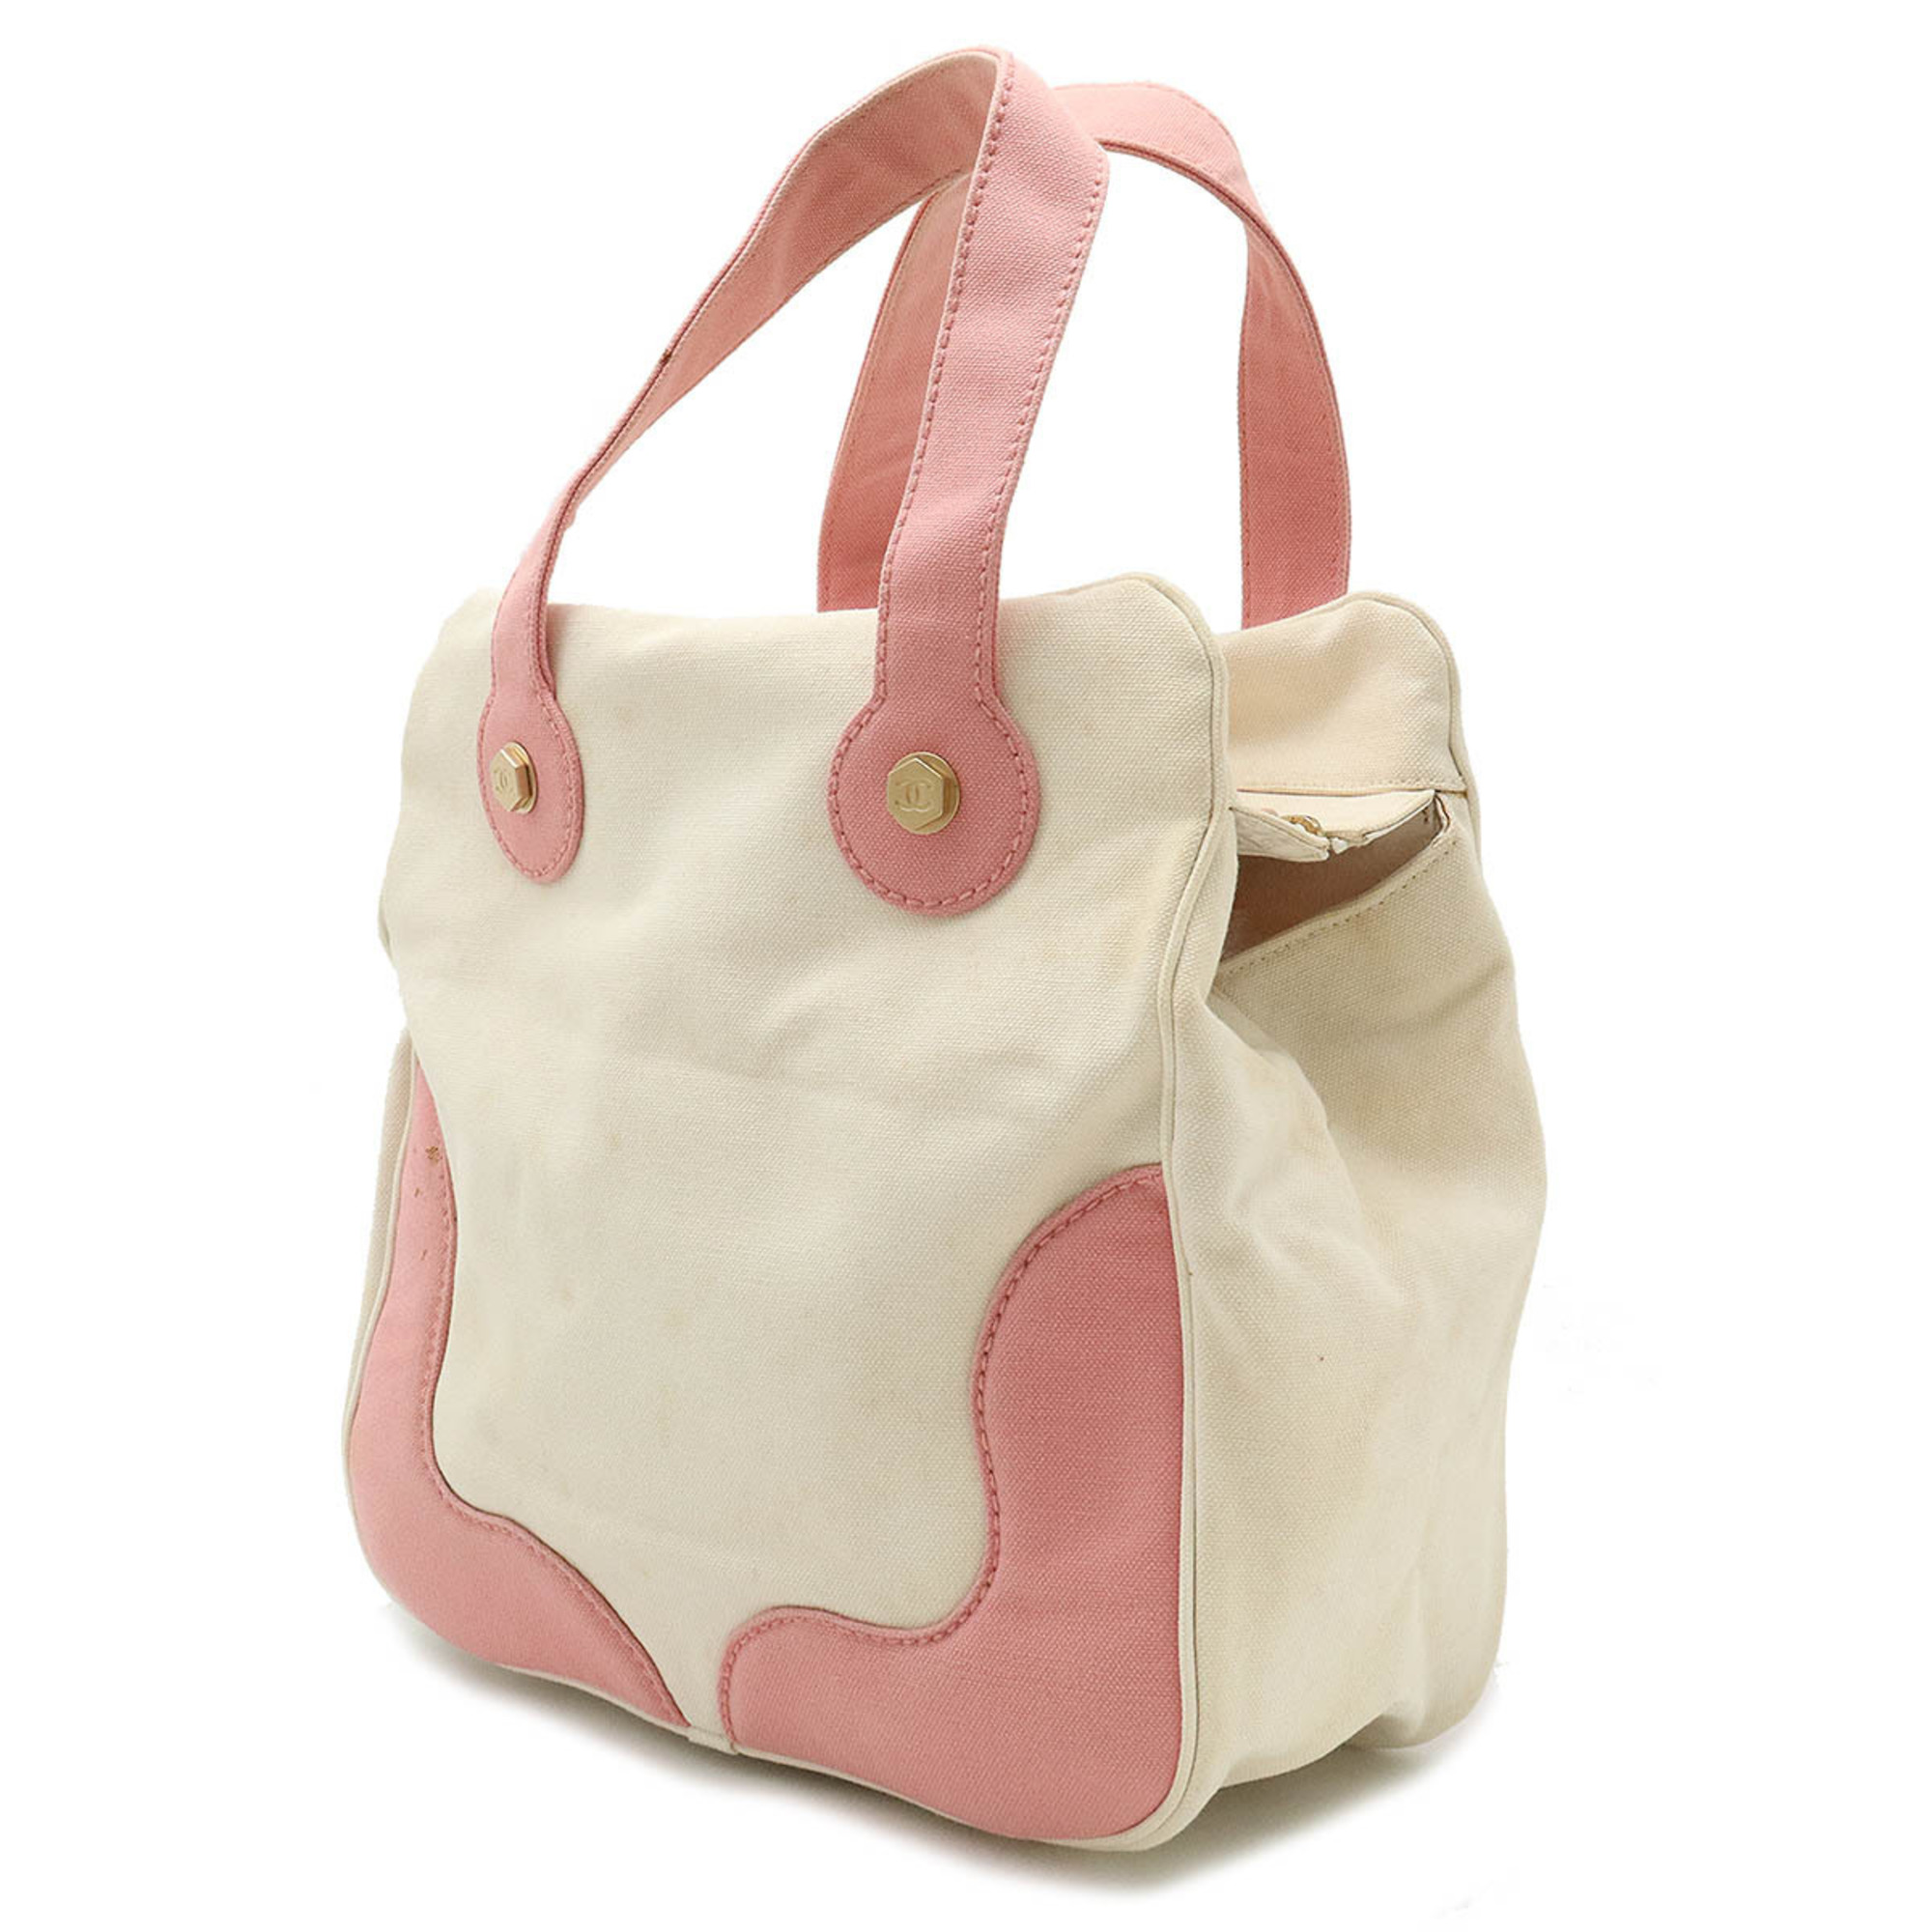 CHANEL Marshmallow Bag Tote Handbag Canvas Pink Ivory White A24224